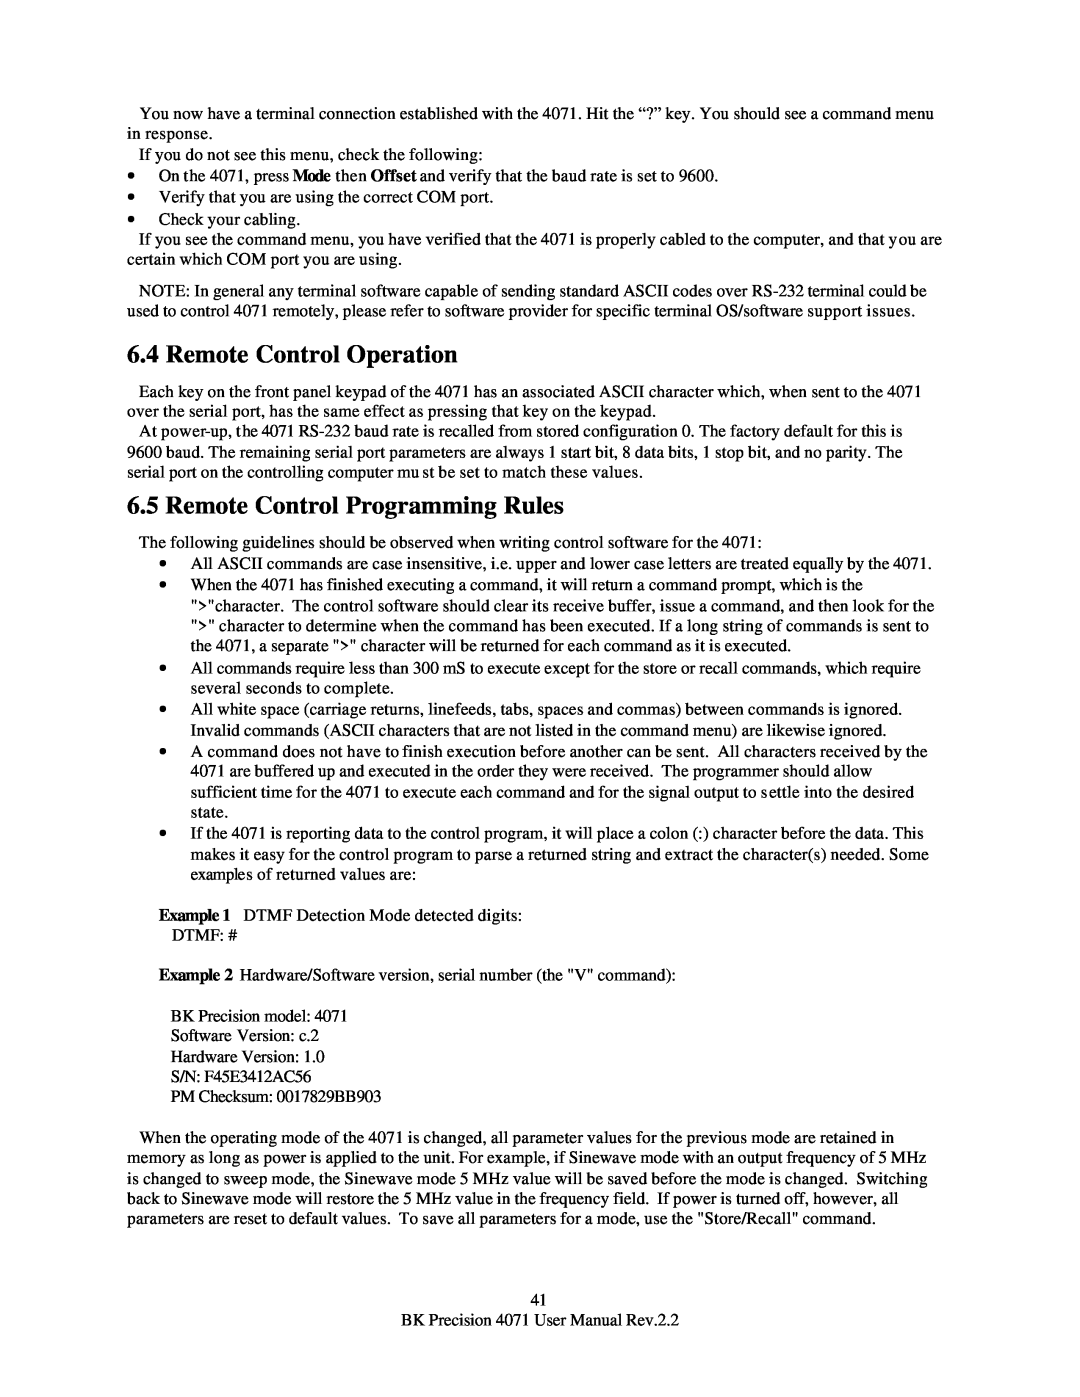 B&K 4071 user manual Remote Control Operation, Remote Control Programming Rules 